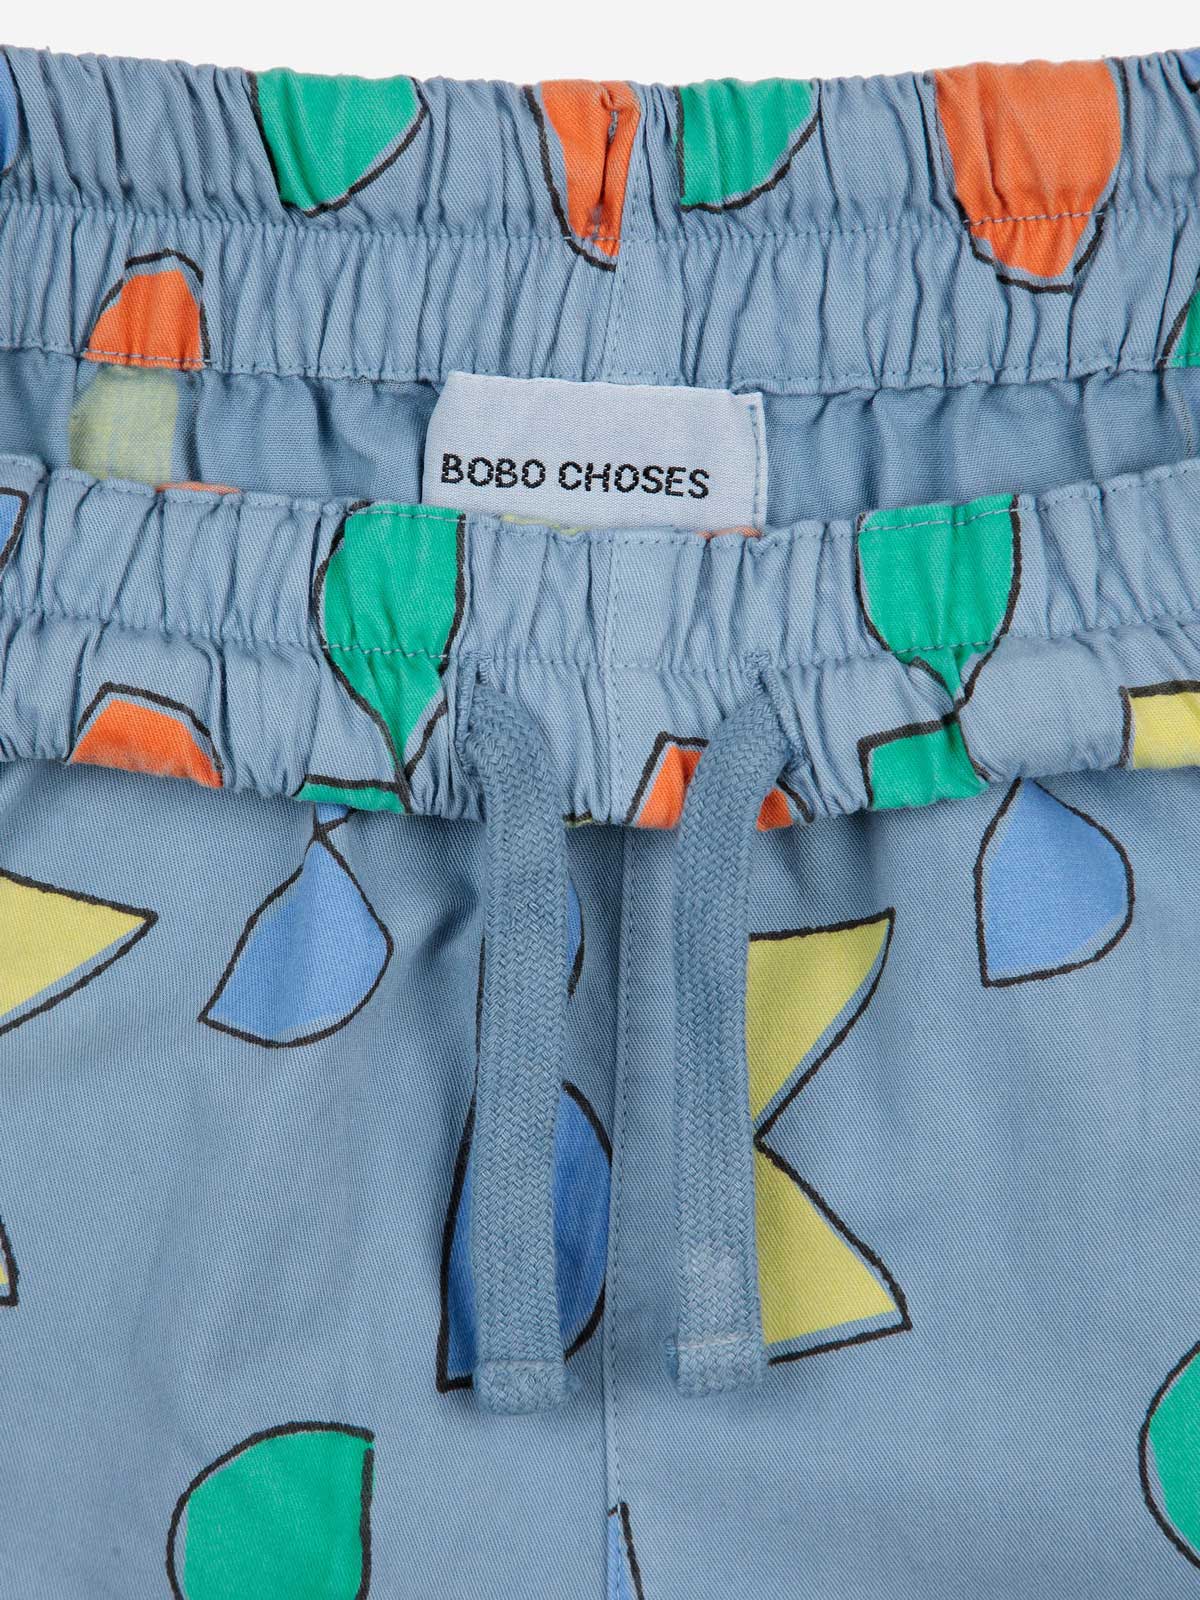 Colorful Bobo Choses All Over woven pants